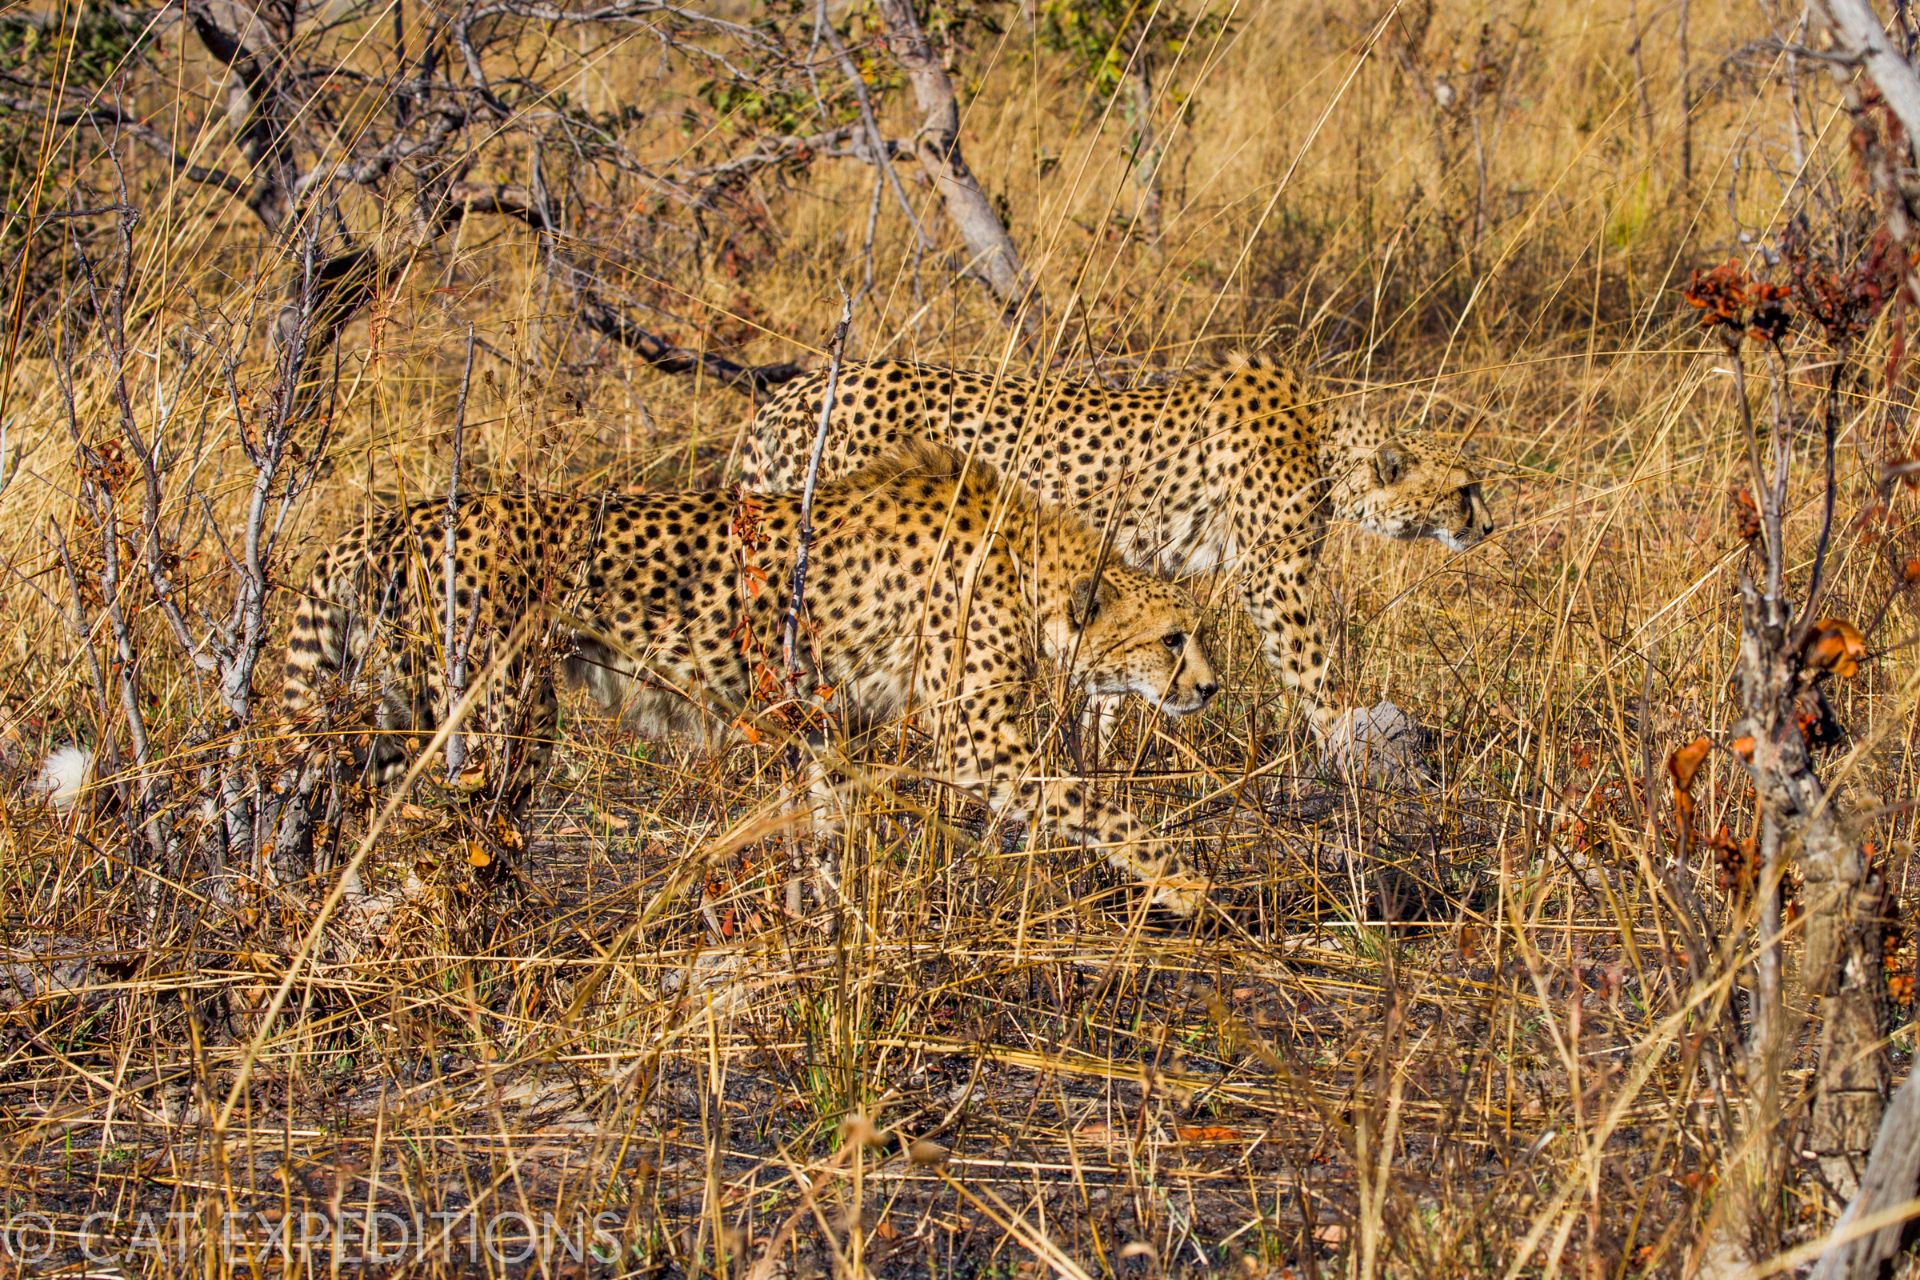 Male cheetahs form coalitions, like lions